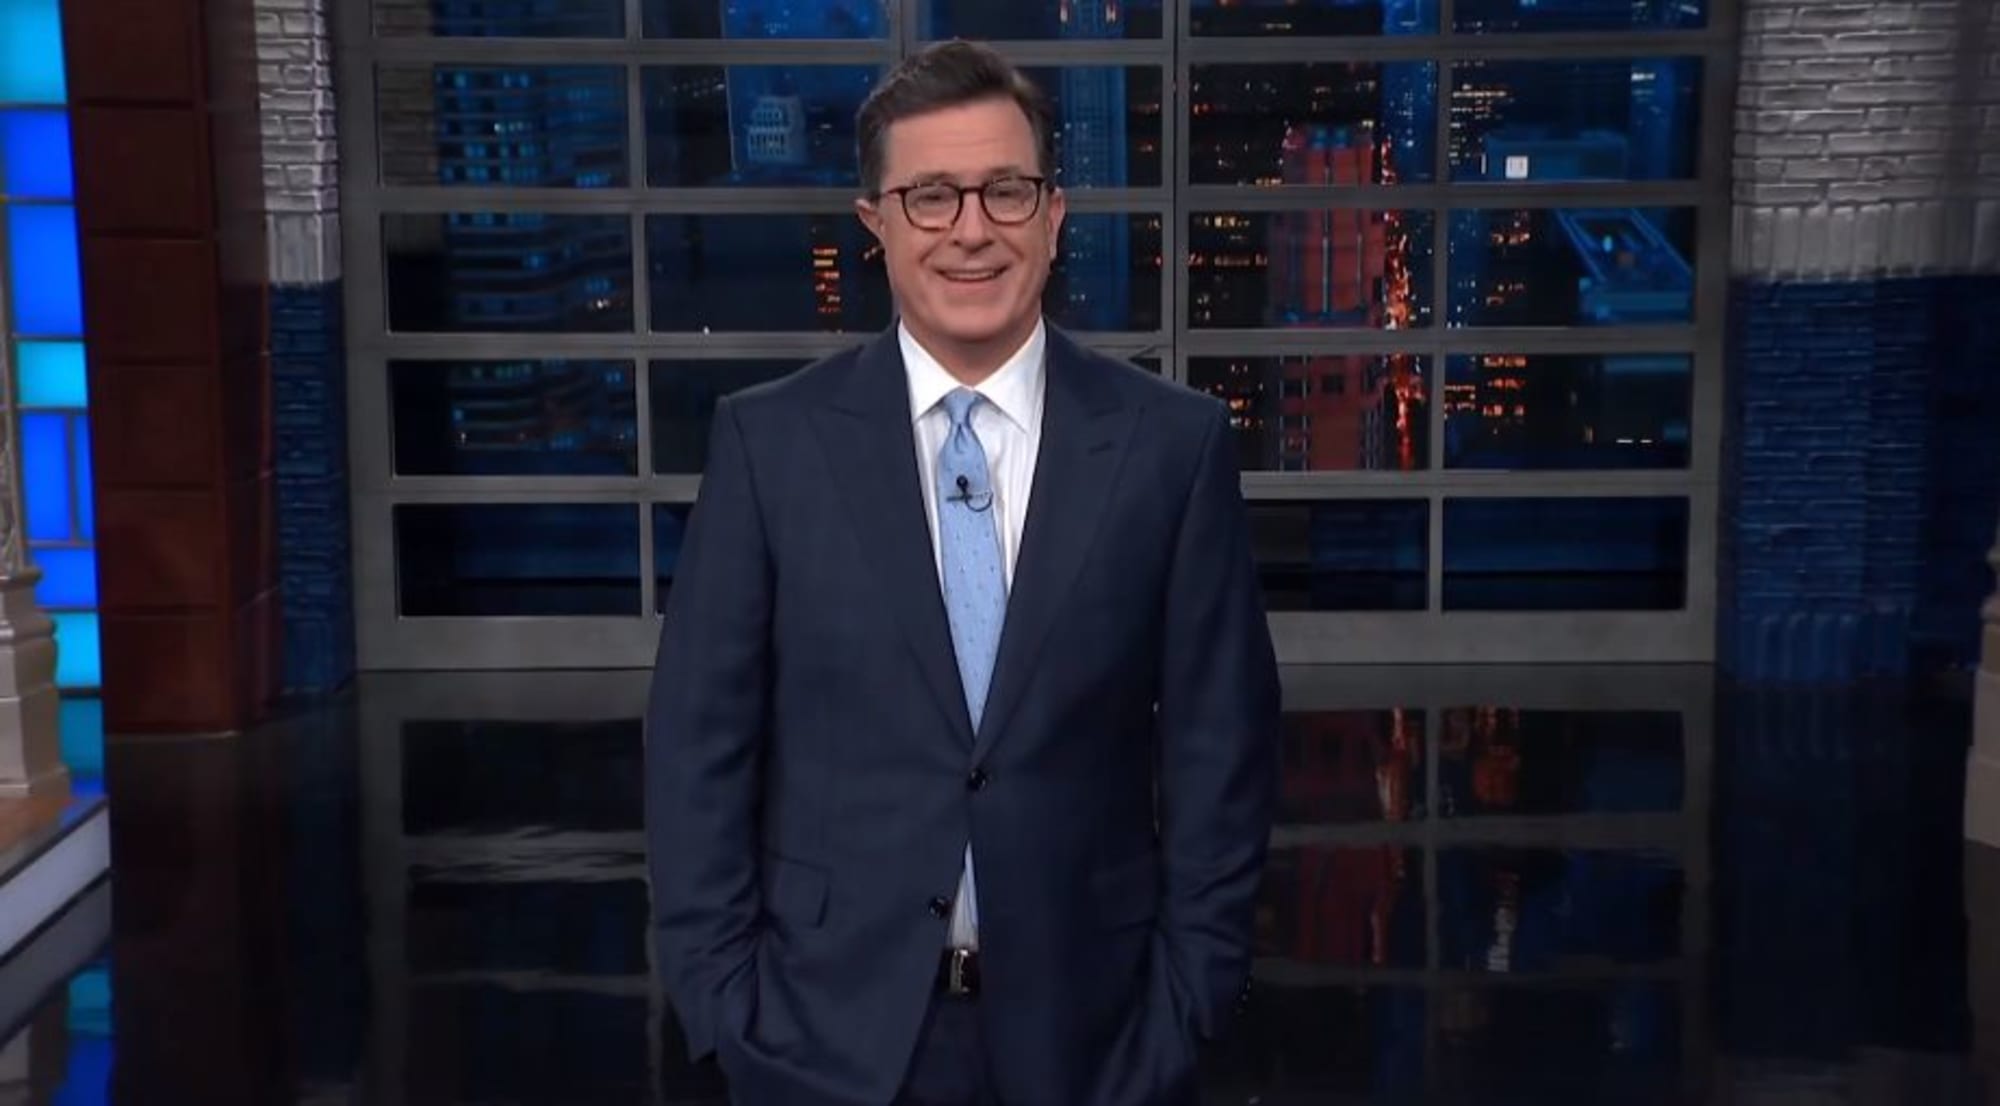 Stephen Colbert addresses Oscars and Sam Nunberg in monologue